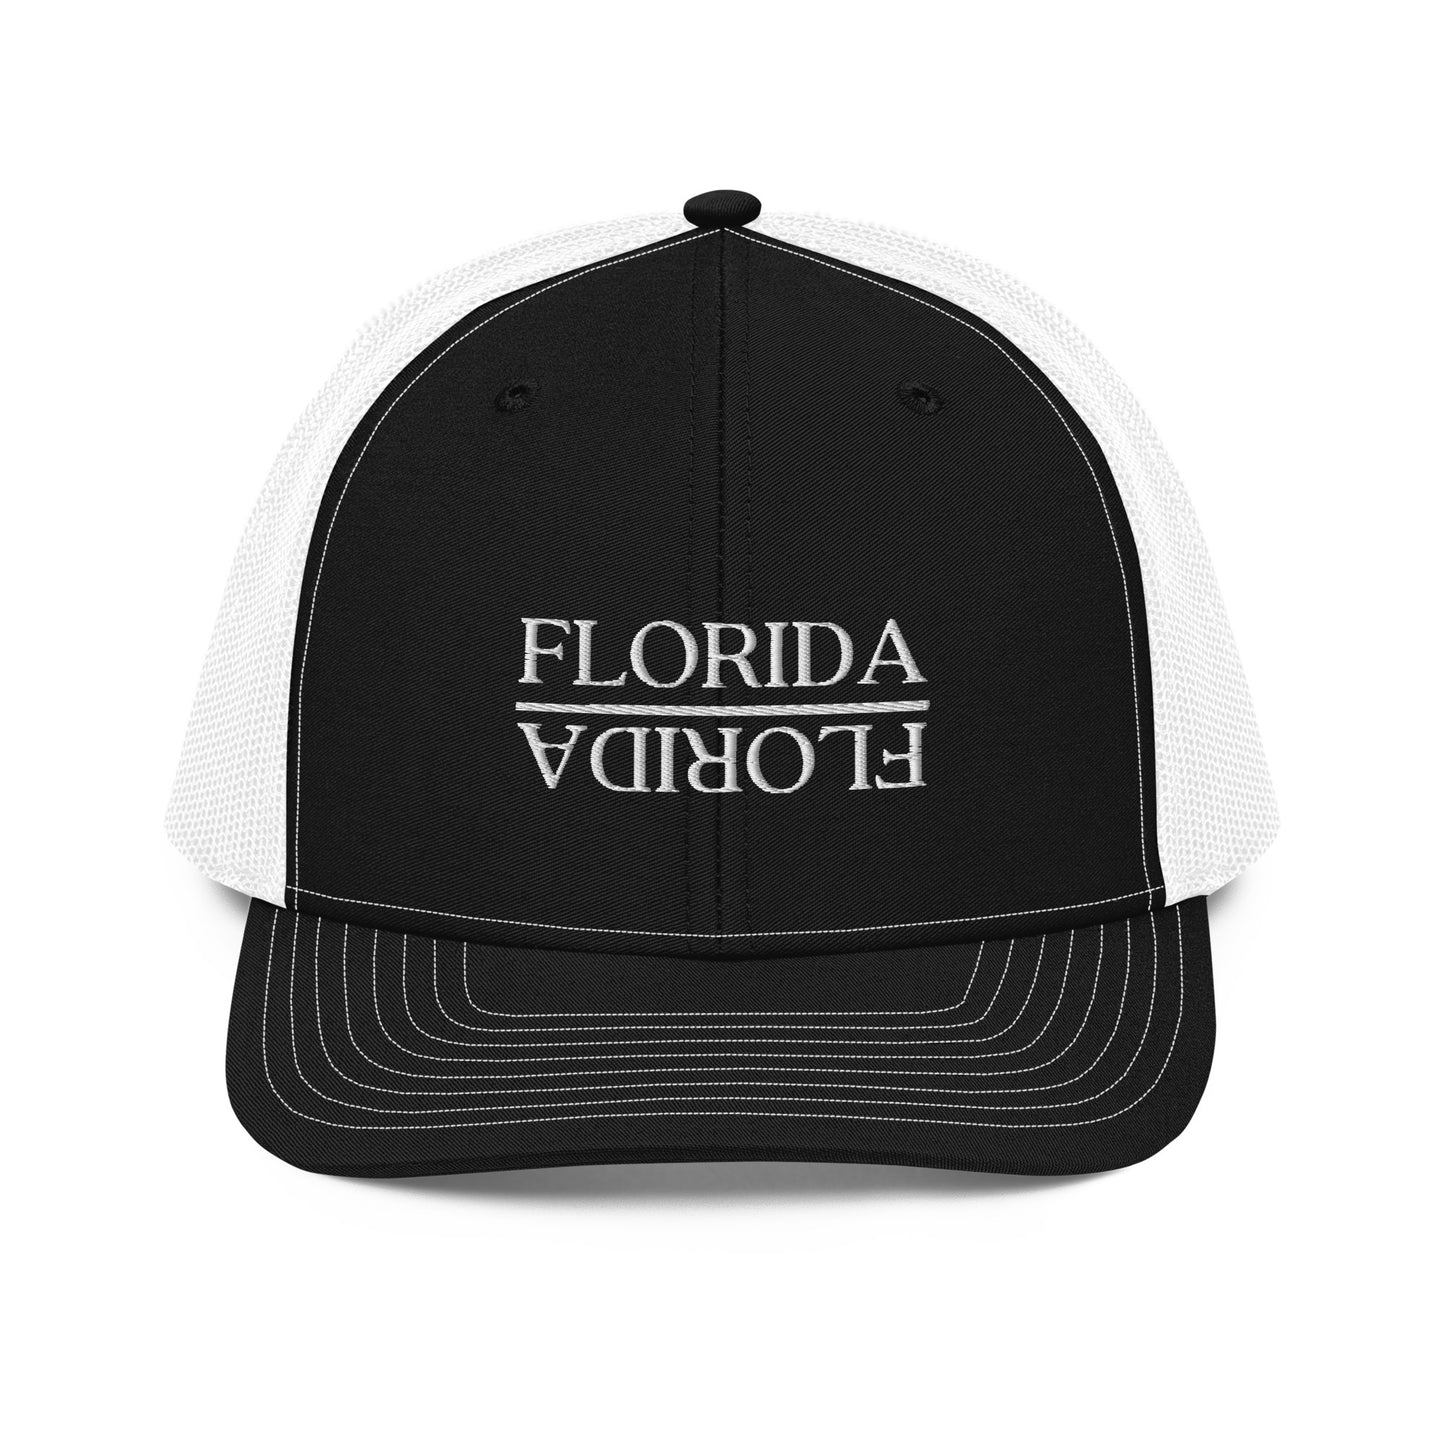 Florida Trucker Hat - Black